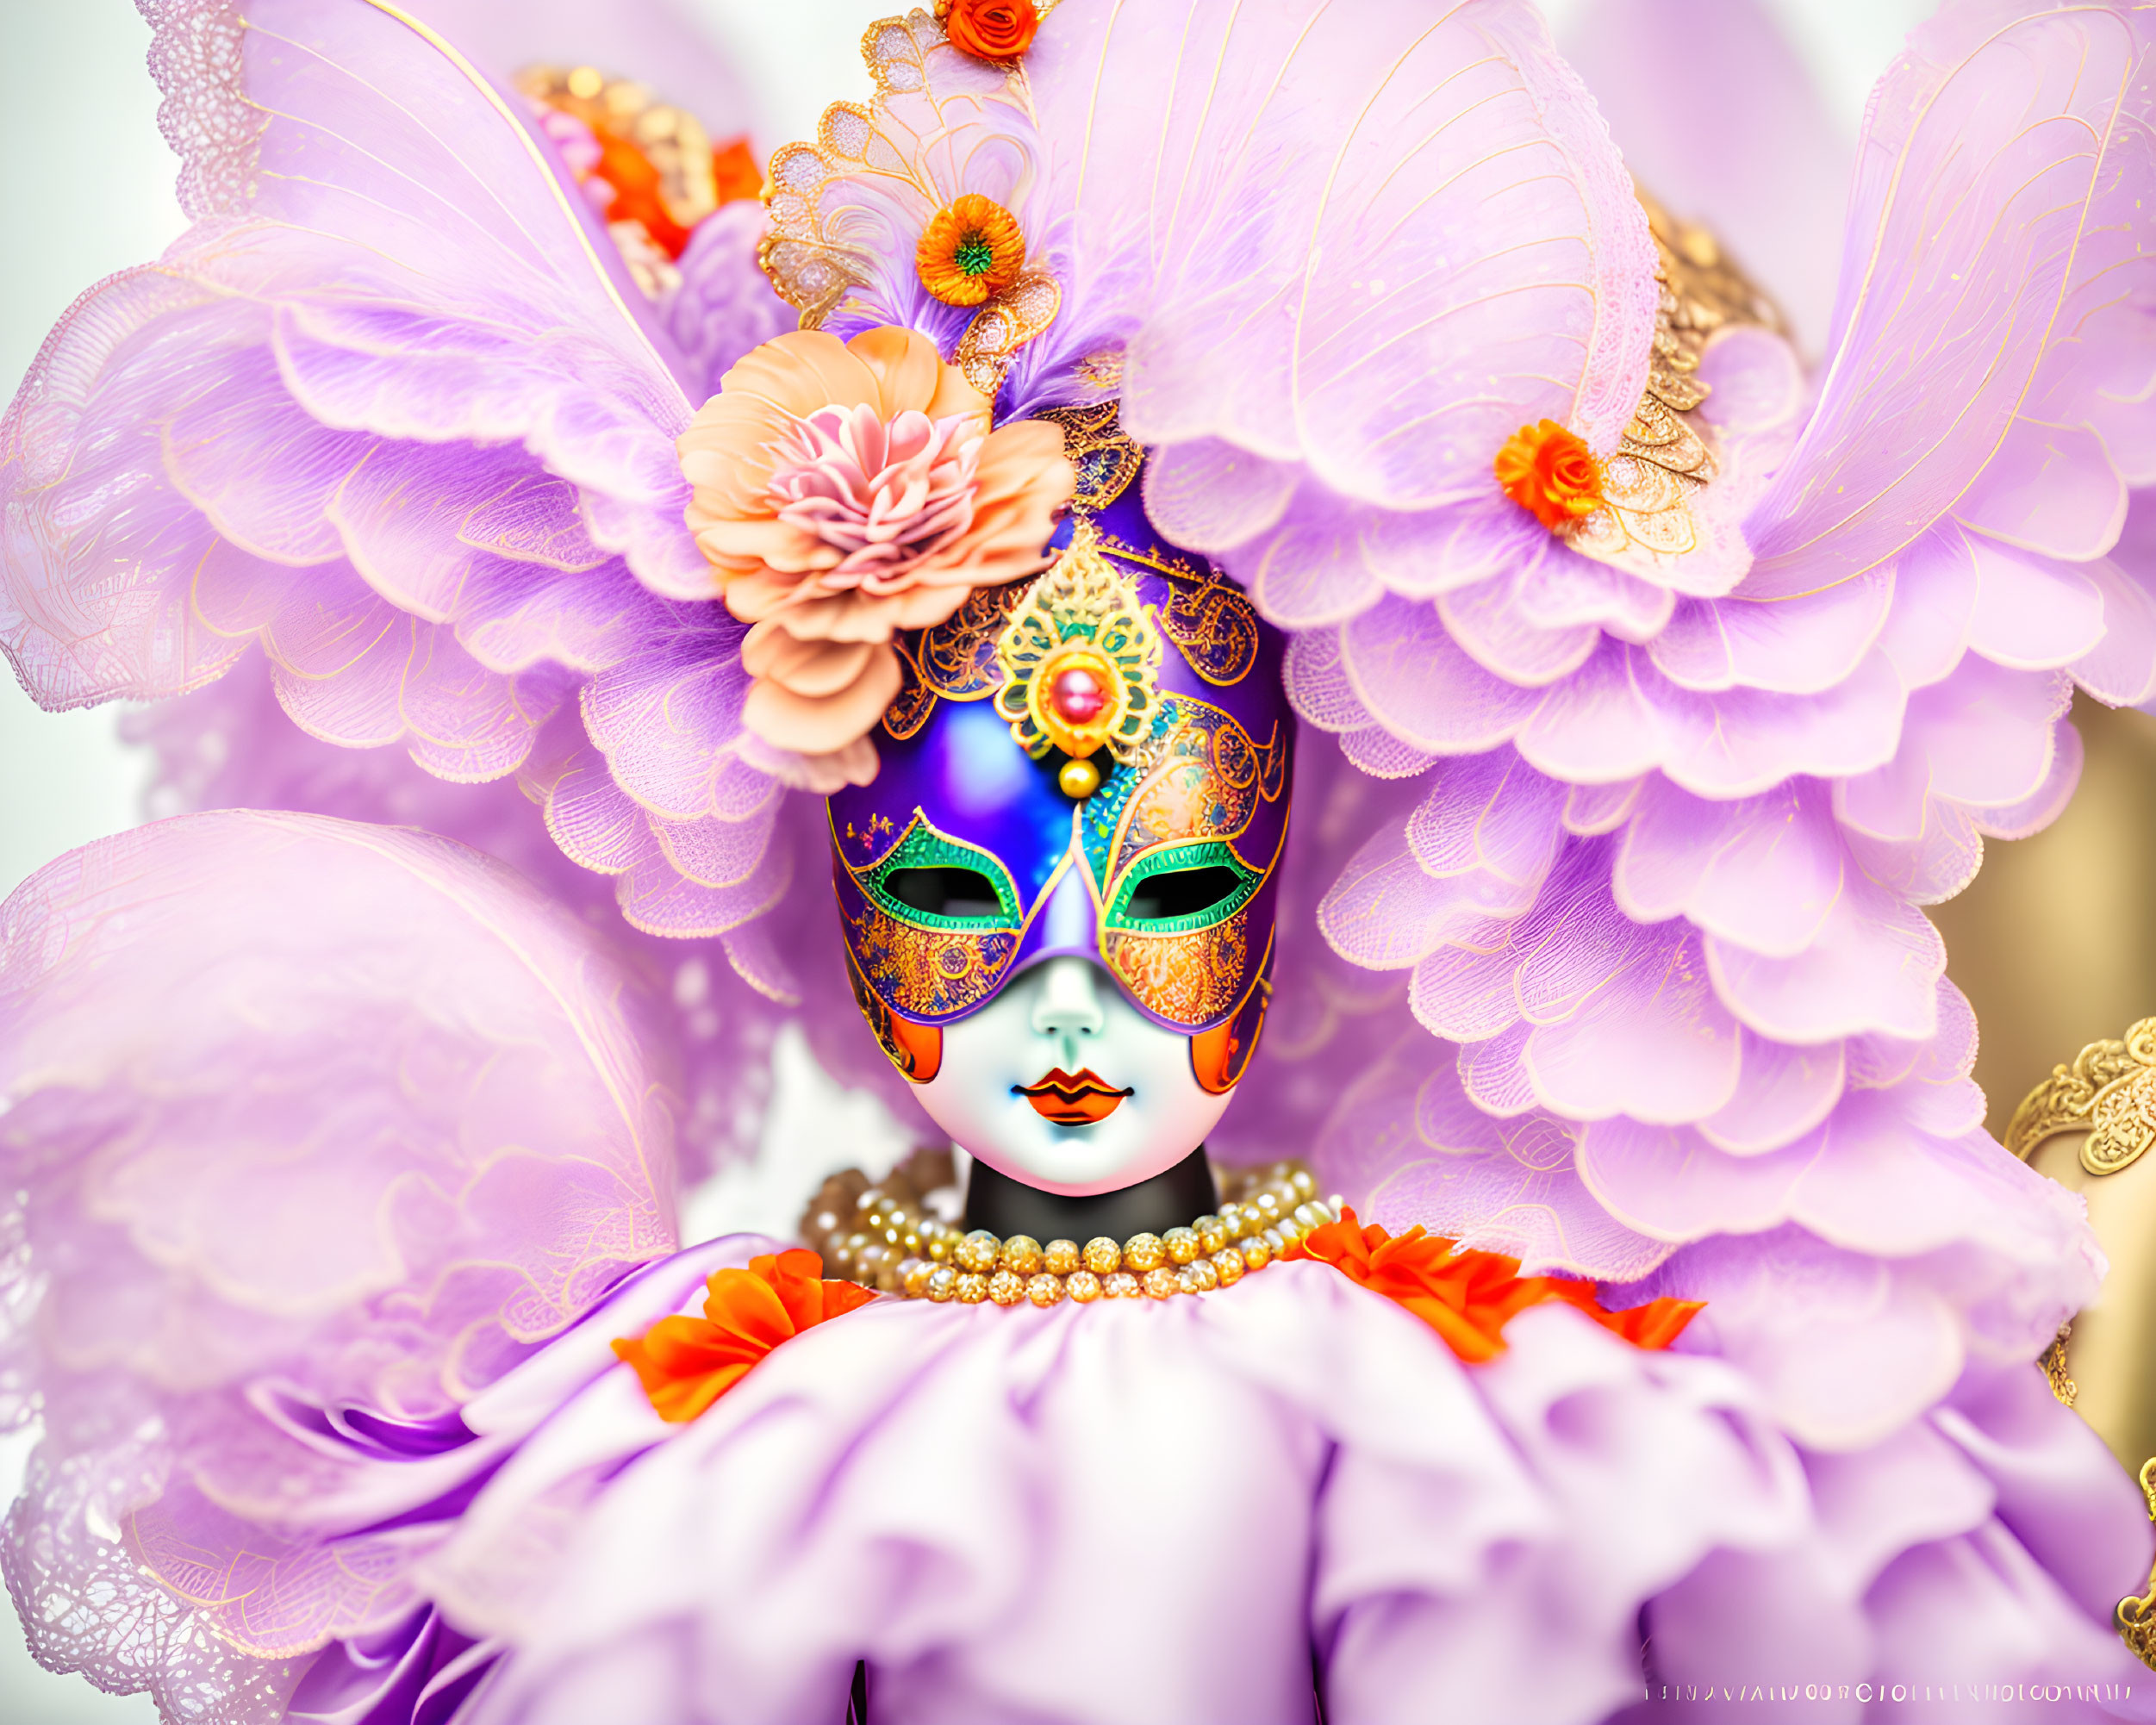 Mystical Masquerade: A Carnival Dream